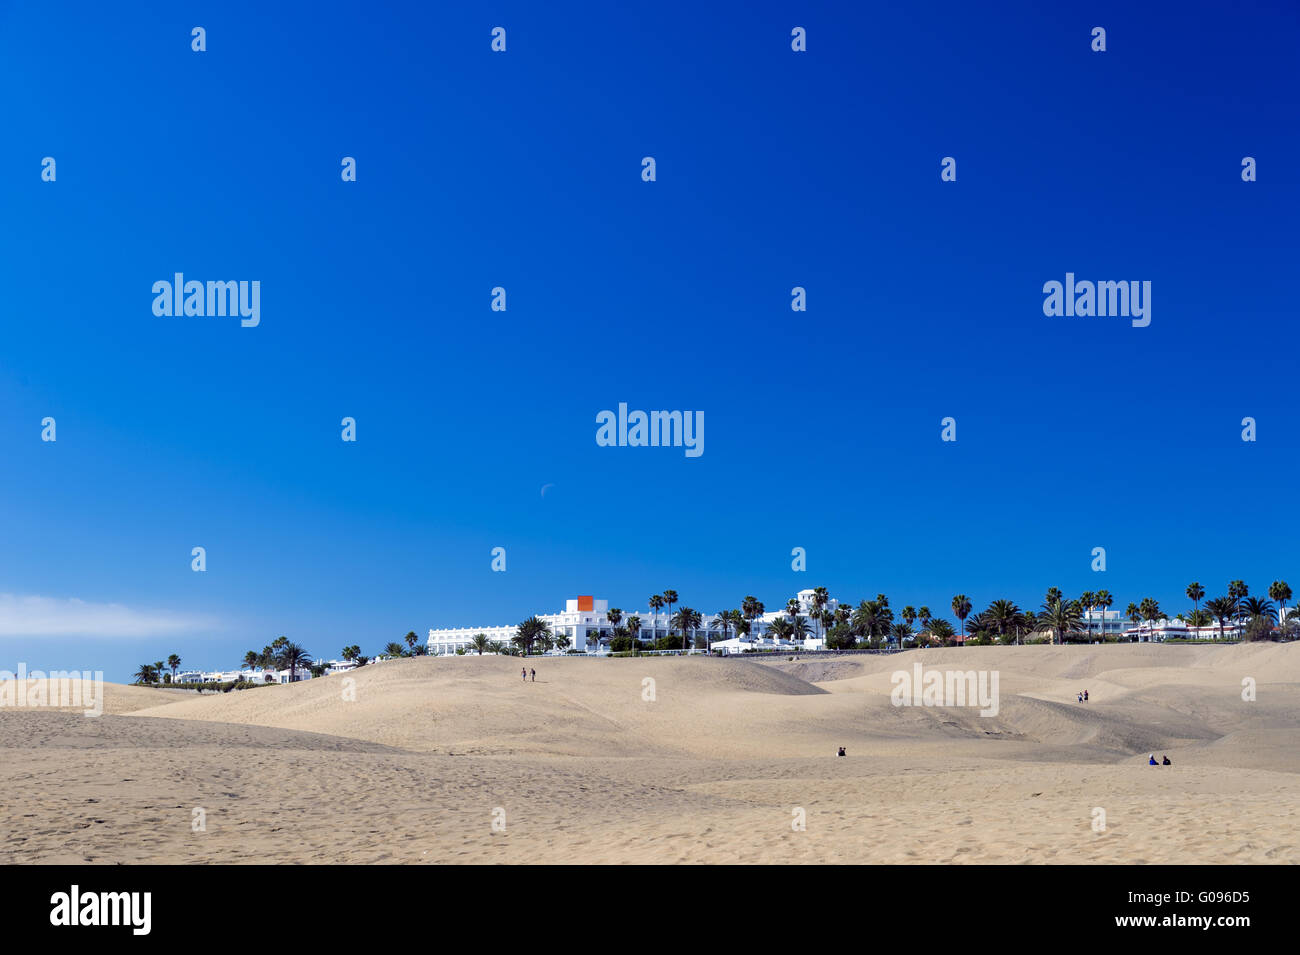 Playa del Ingles on the edge of the dunes Stock Photo